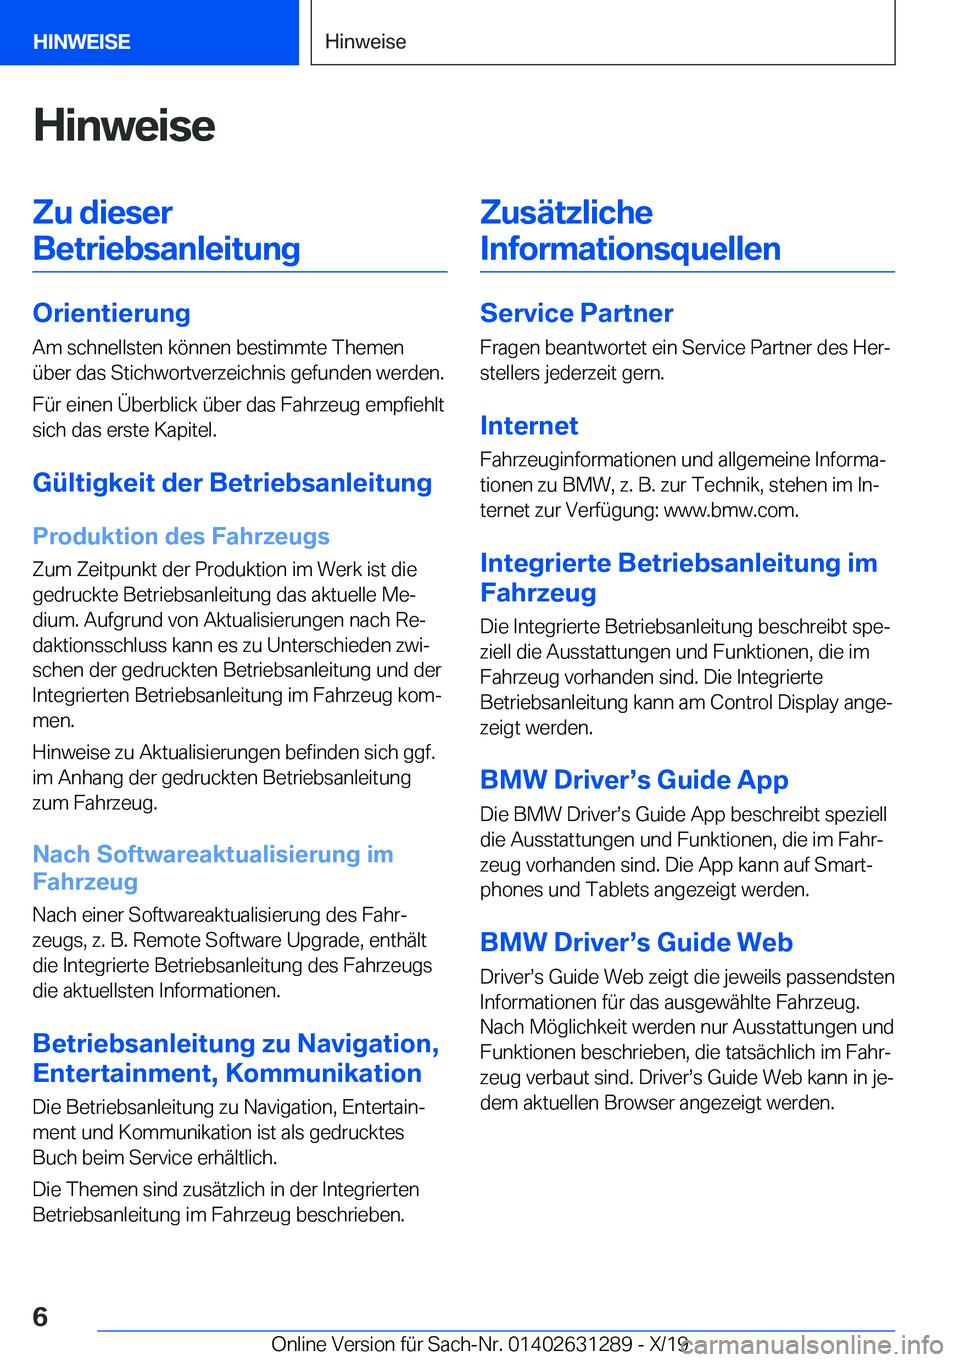 BMW M8 2020  Betriebsanleitungen (in German) �H�i�n�w�e�i�s�e�Z�u��d�i�e�s�e�r�B�e�t�r�i�e�b�s�a�n�l�e�i�t�u�n�g
�O�r�i�e�n�t�i�e�r�u�n�g �A�m��s�c�h�n�e�l�l�s�t�e�n��k�